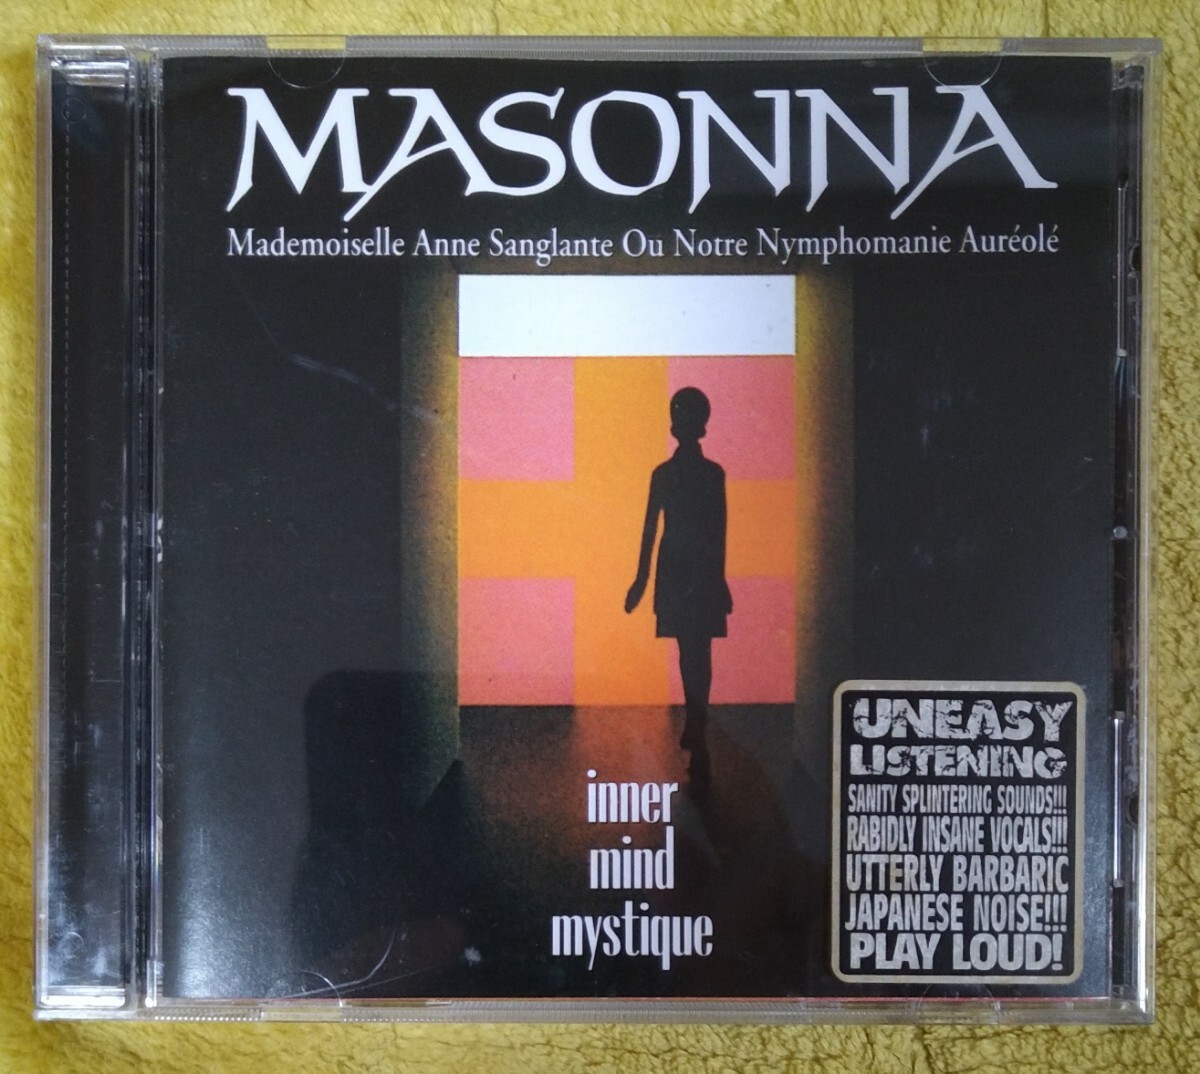 MASONNA INNER MIND MYSTIQUE 廃盤輸入盤中古CD マゾンナ 山崎マゾ ボートラ収録 RR6940-2_画像1